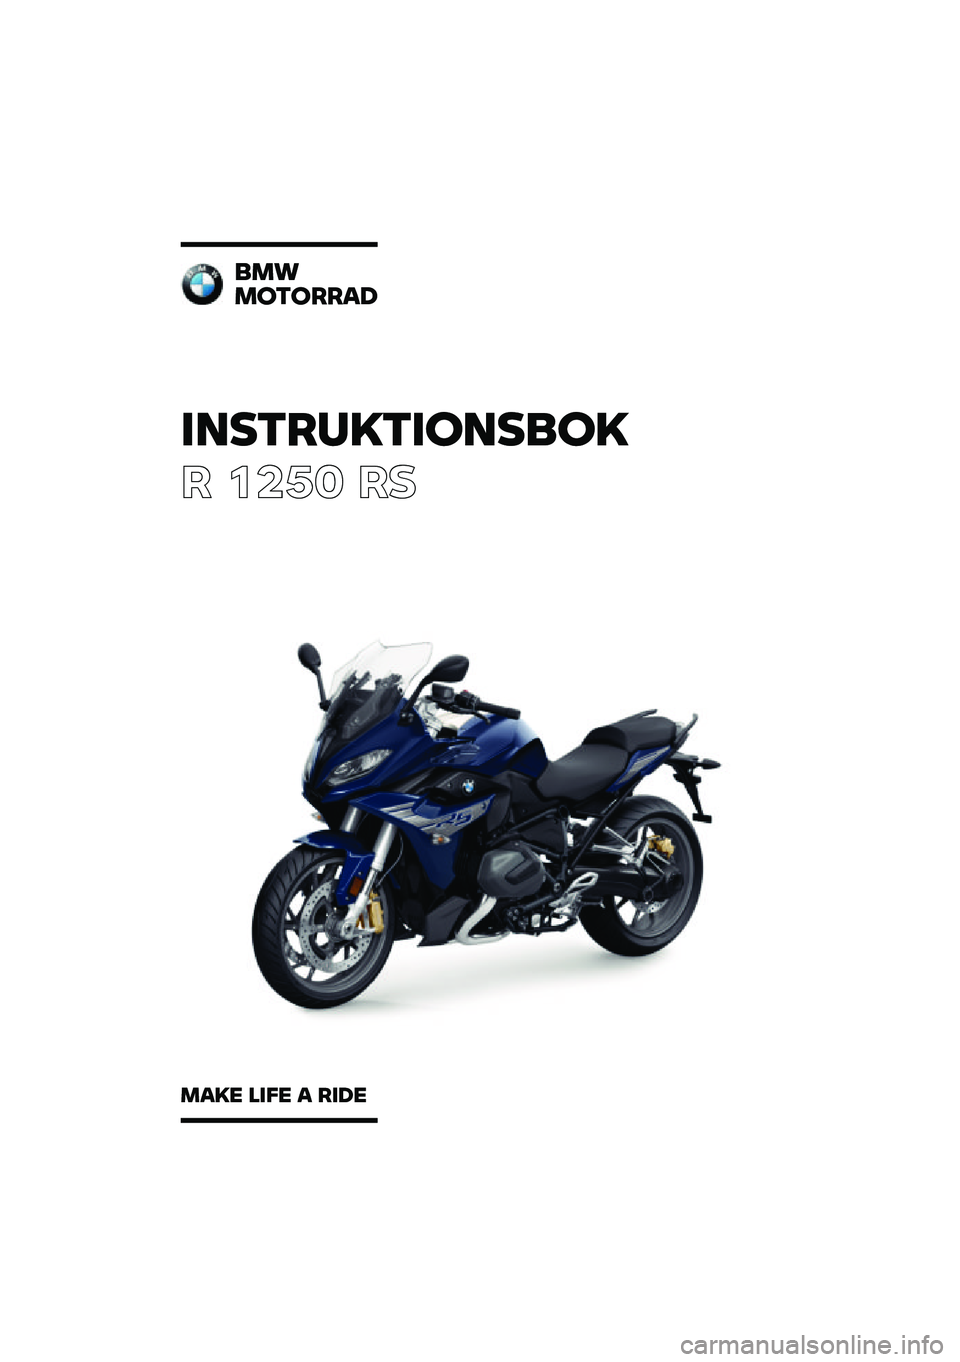 BMW MOTORRAD R 1250 RS 2020  Instruktionsbok (in Swedish) �������\b���	���
�	�\b
� ����	 ��
�
��\f
��	��	���
�
��
�\b� ���� �
 ���� 